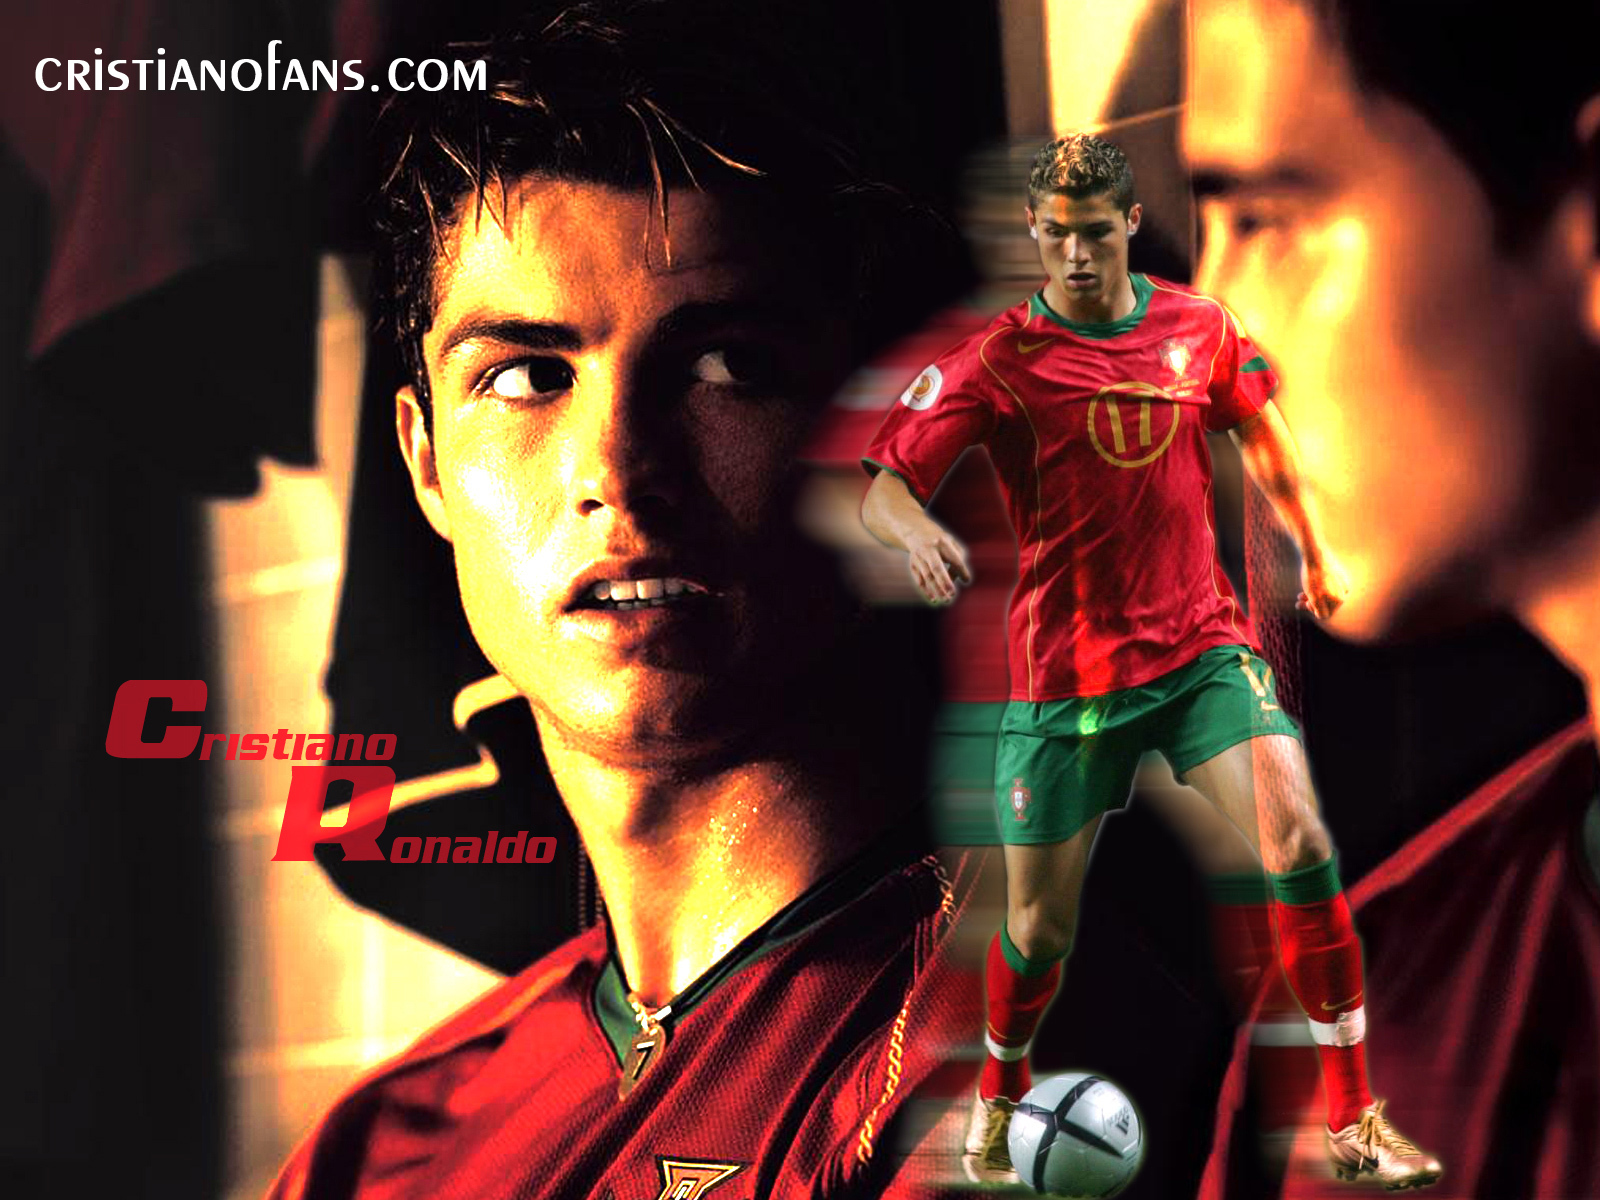 cristiano ronaldo wallpaper,fictional character,football player,hero,action figure,soccer player